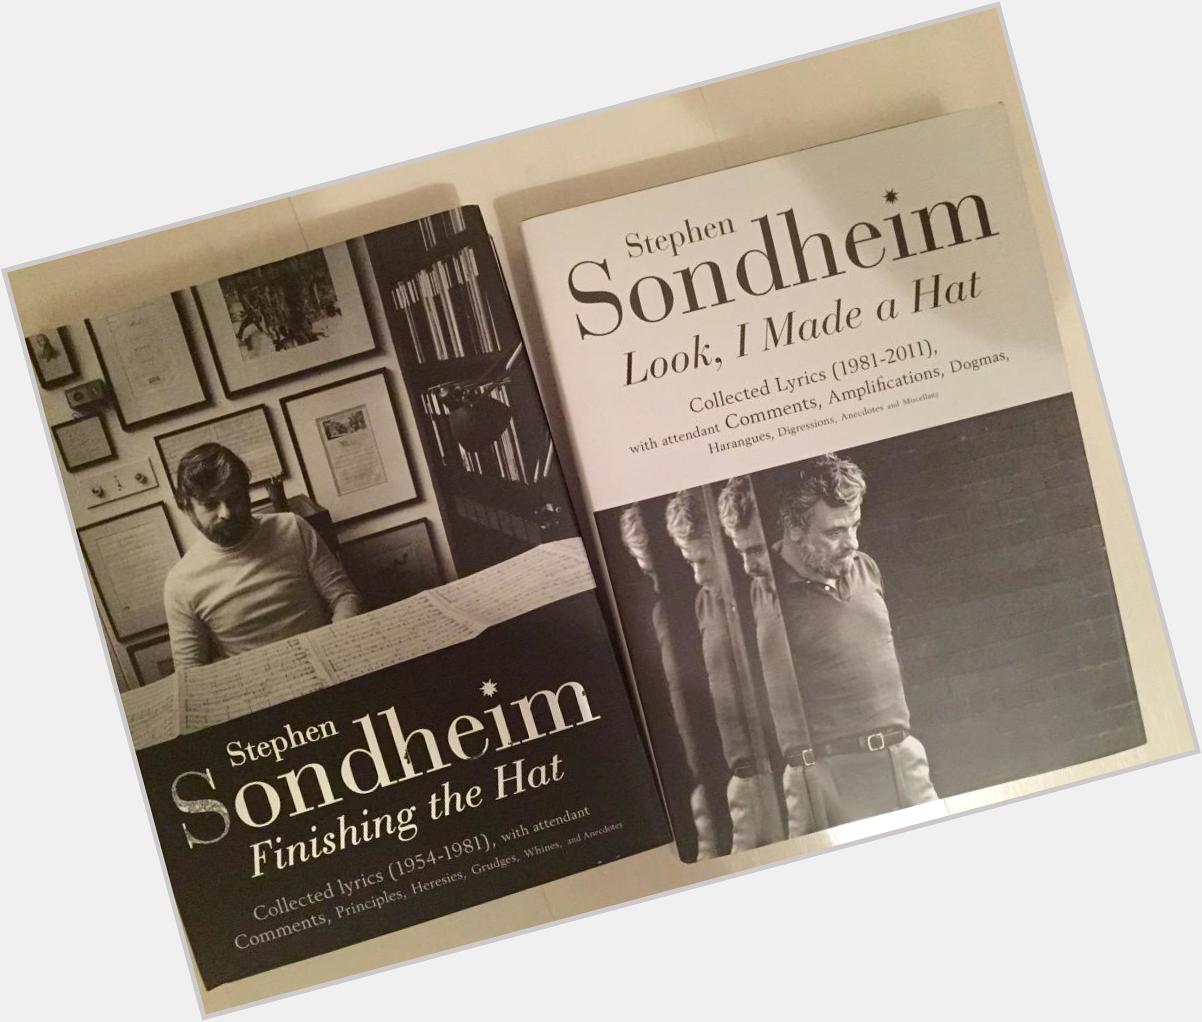 Happy 85th Birthday Stephen Sondheim! A true genius of our time!! 